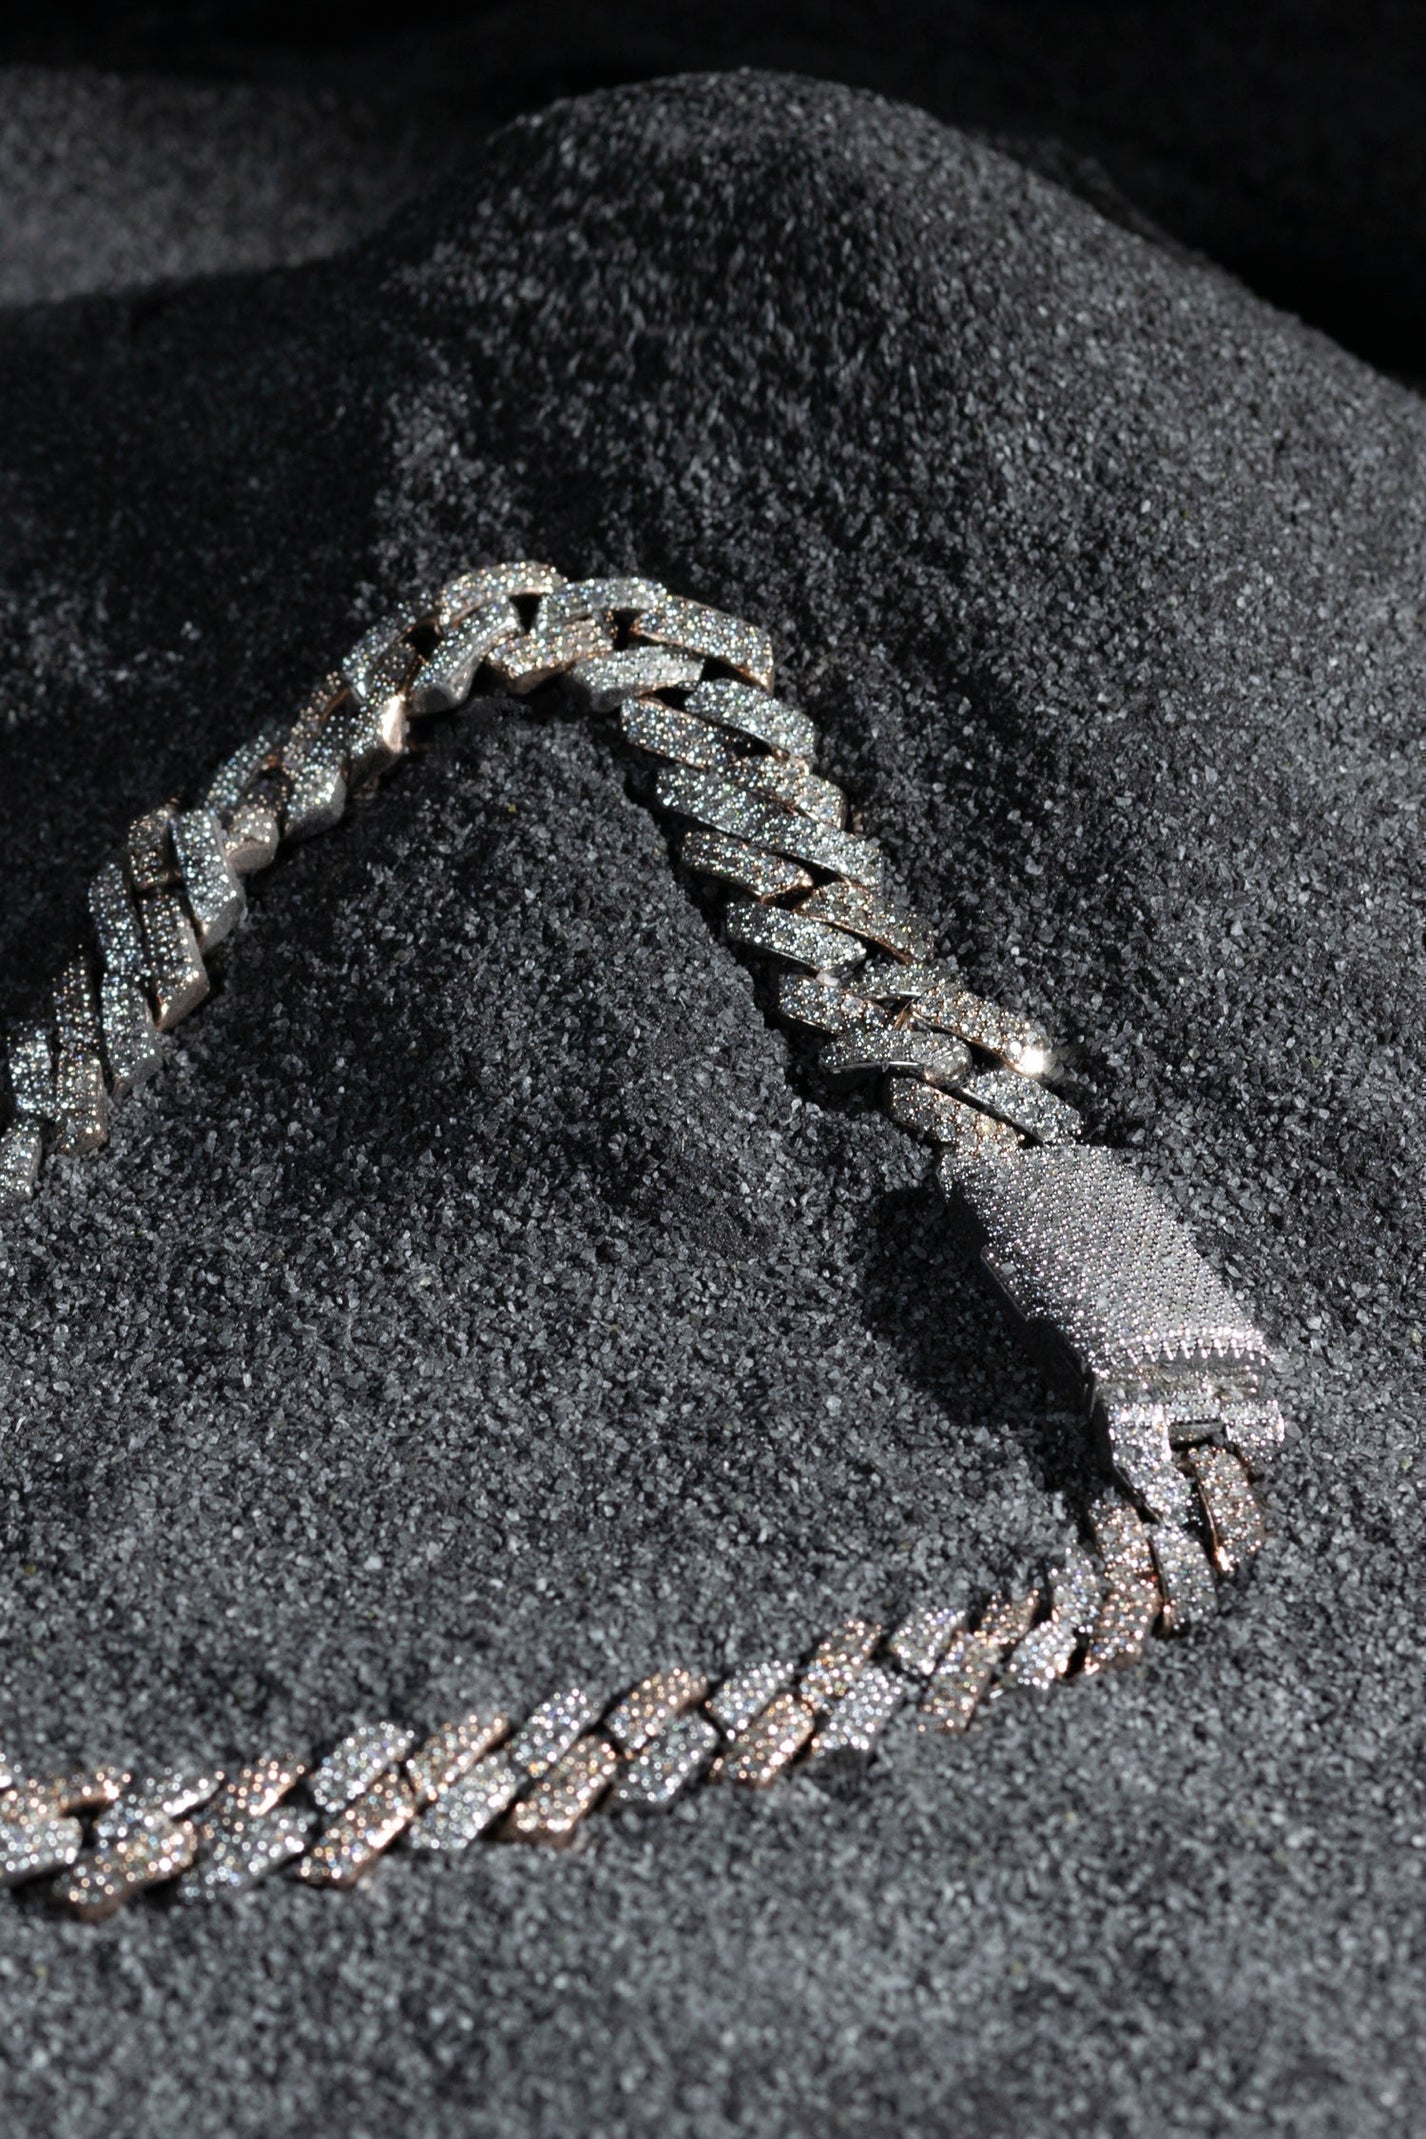 DARKAI 90's Rope-Chain Metal Necklace - Silver